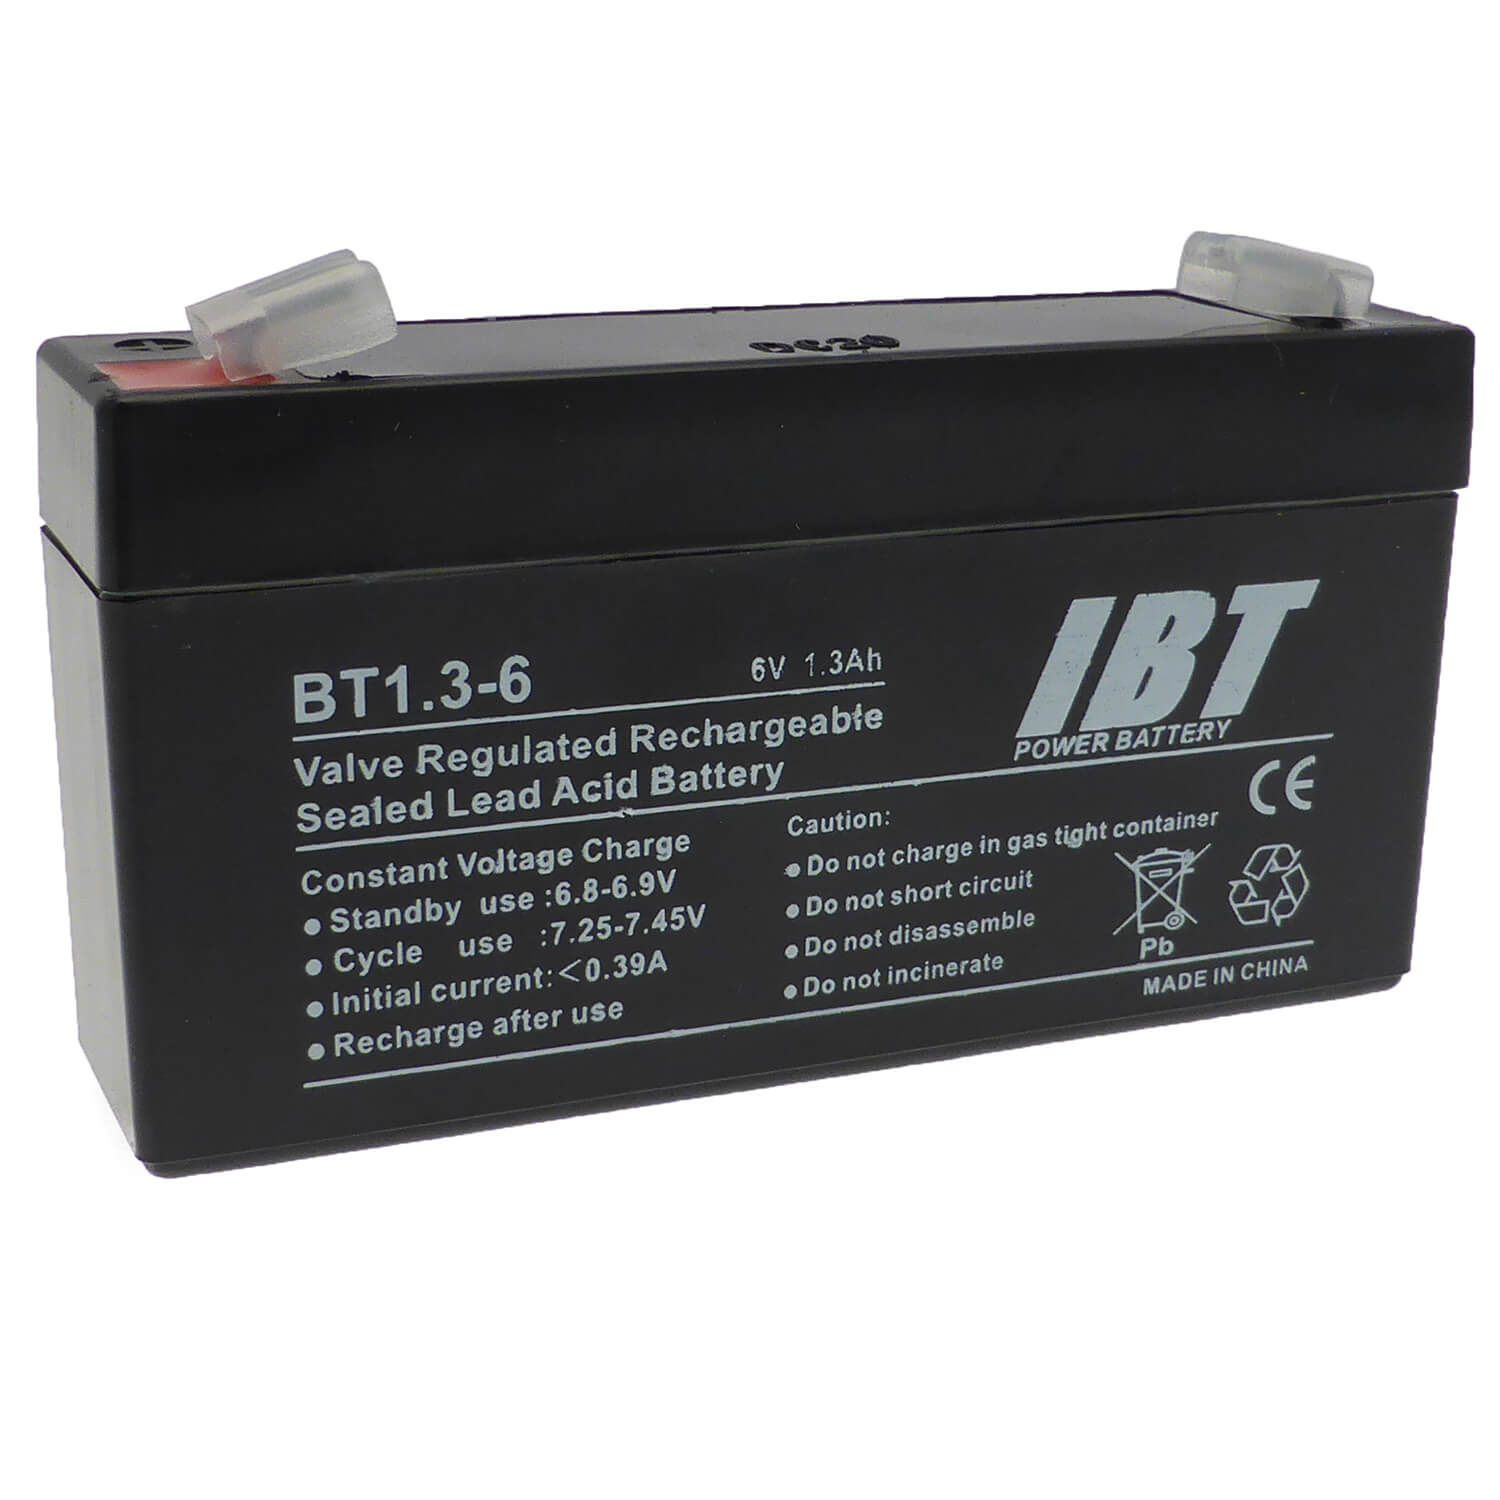 6V 1.2Ah Rechargeable Back-up Battery for Friedland SA, SL & SK Alarms